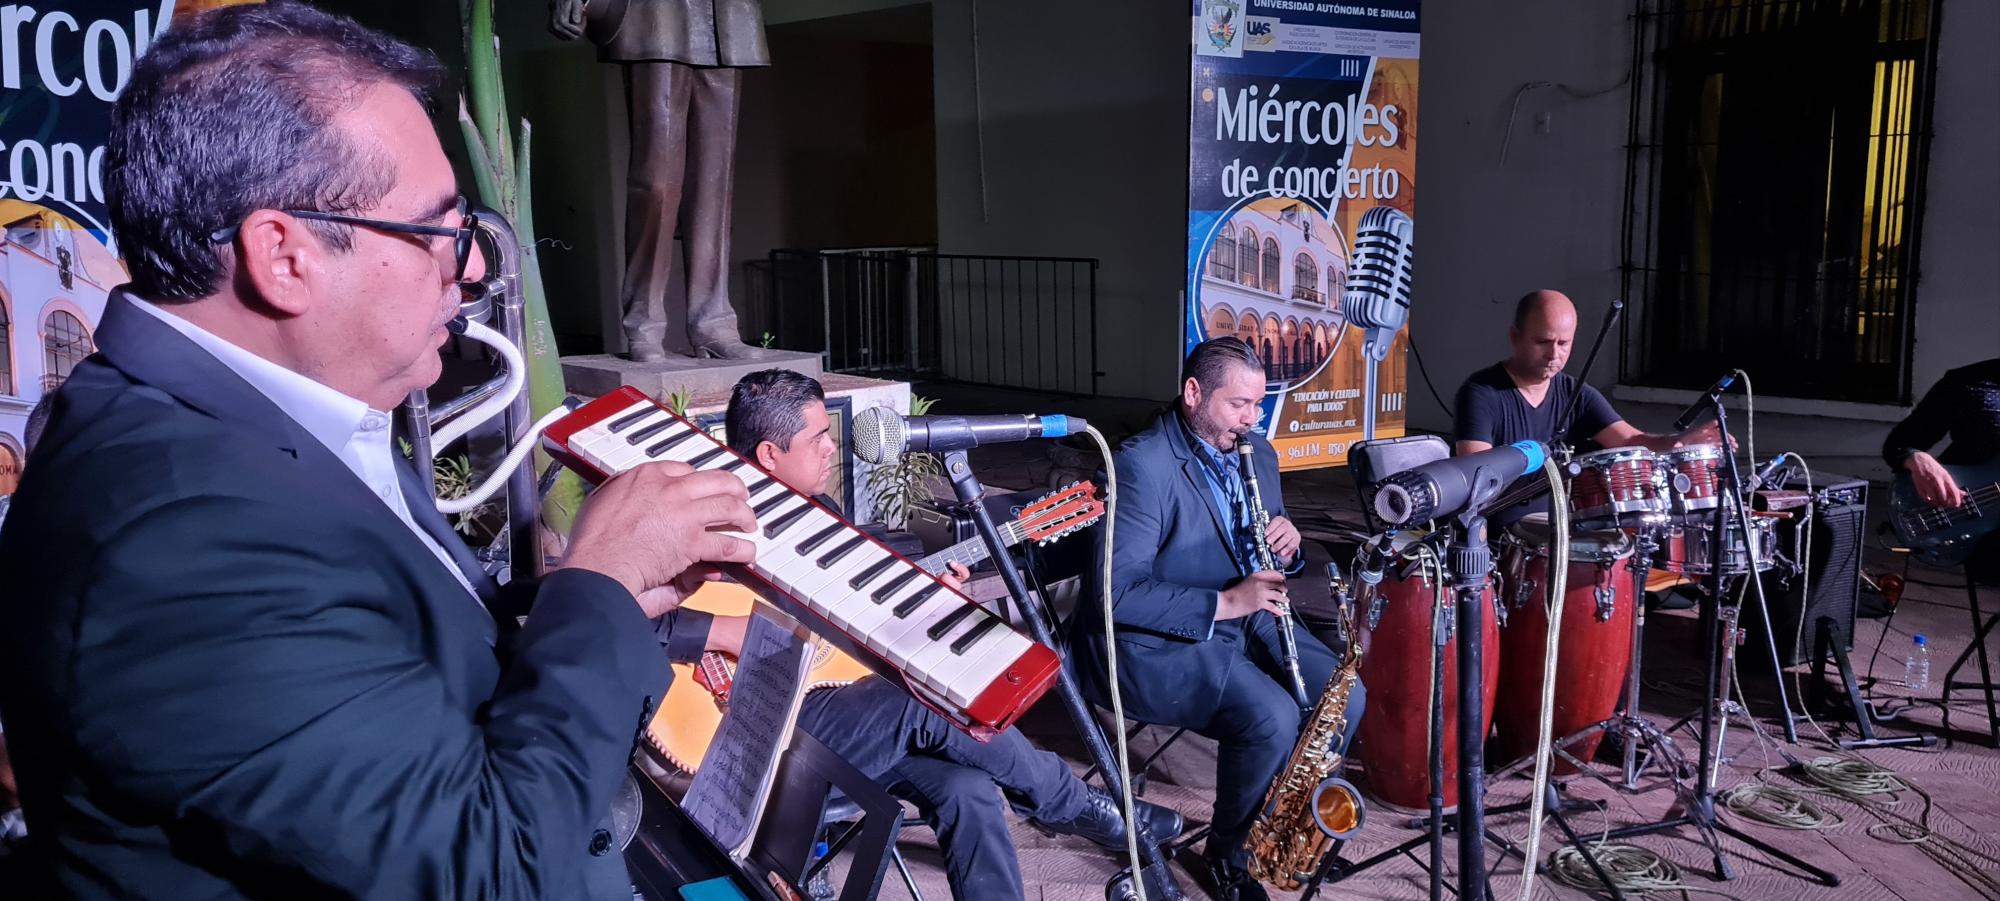 $!Dedican a Sinaloa el espectáculo musical de Café para dos